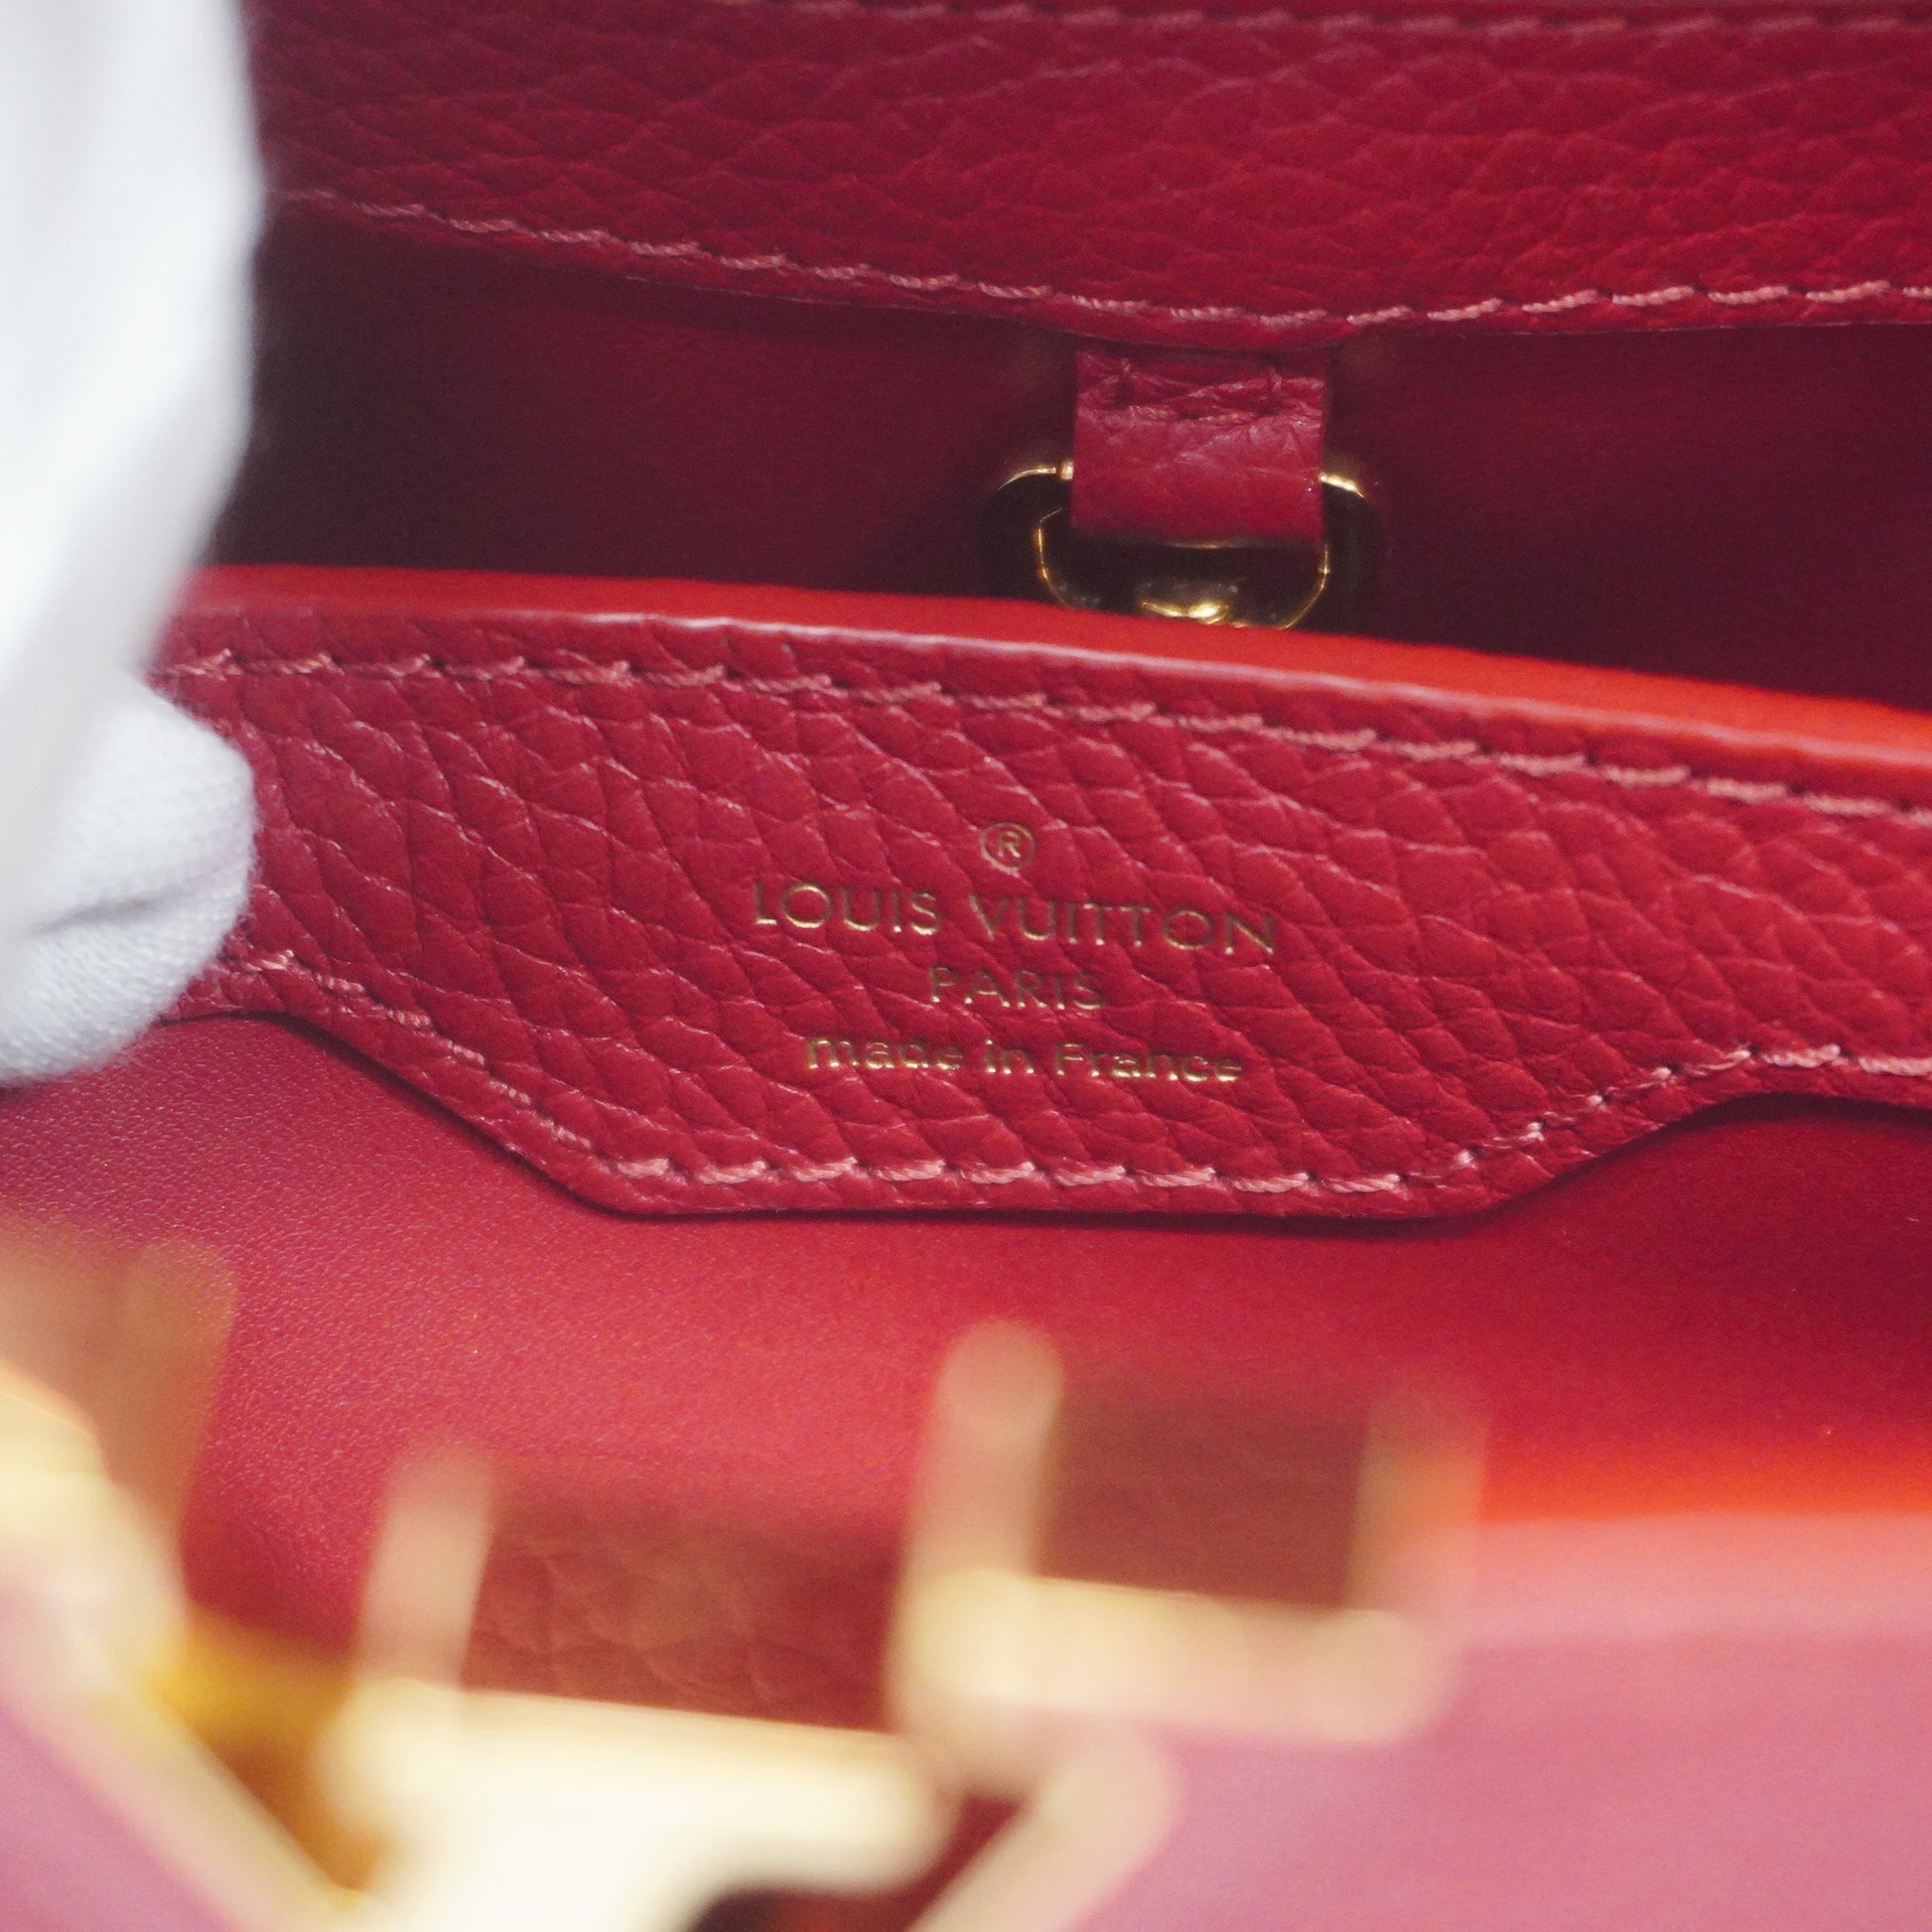 Casé Louis Vuitton 💞 #bmobliestyle #fundasluxury #iphonefundas #tucas